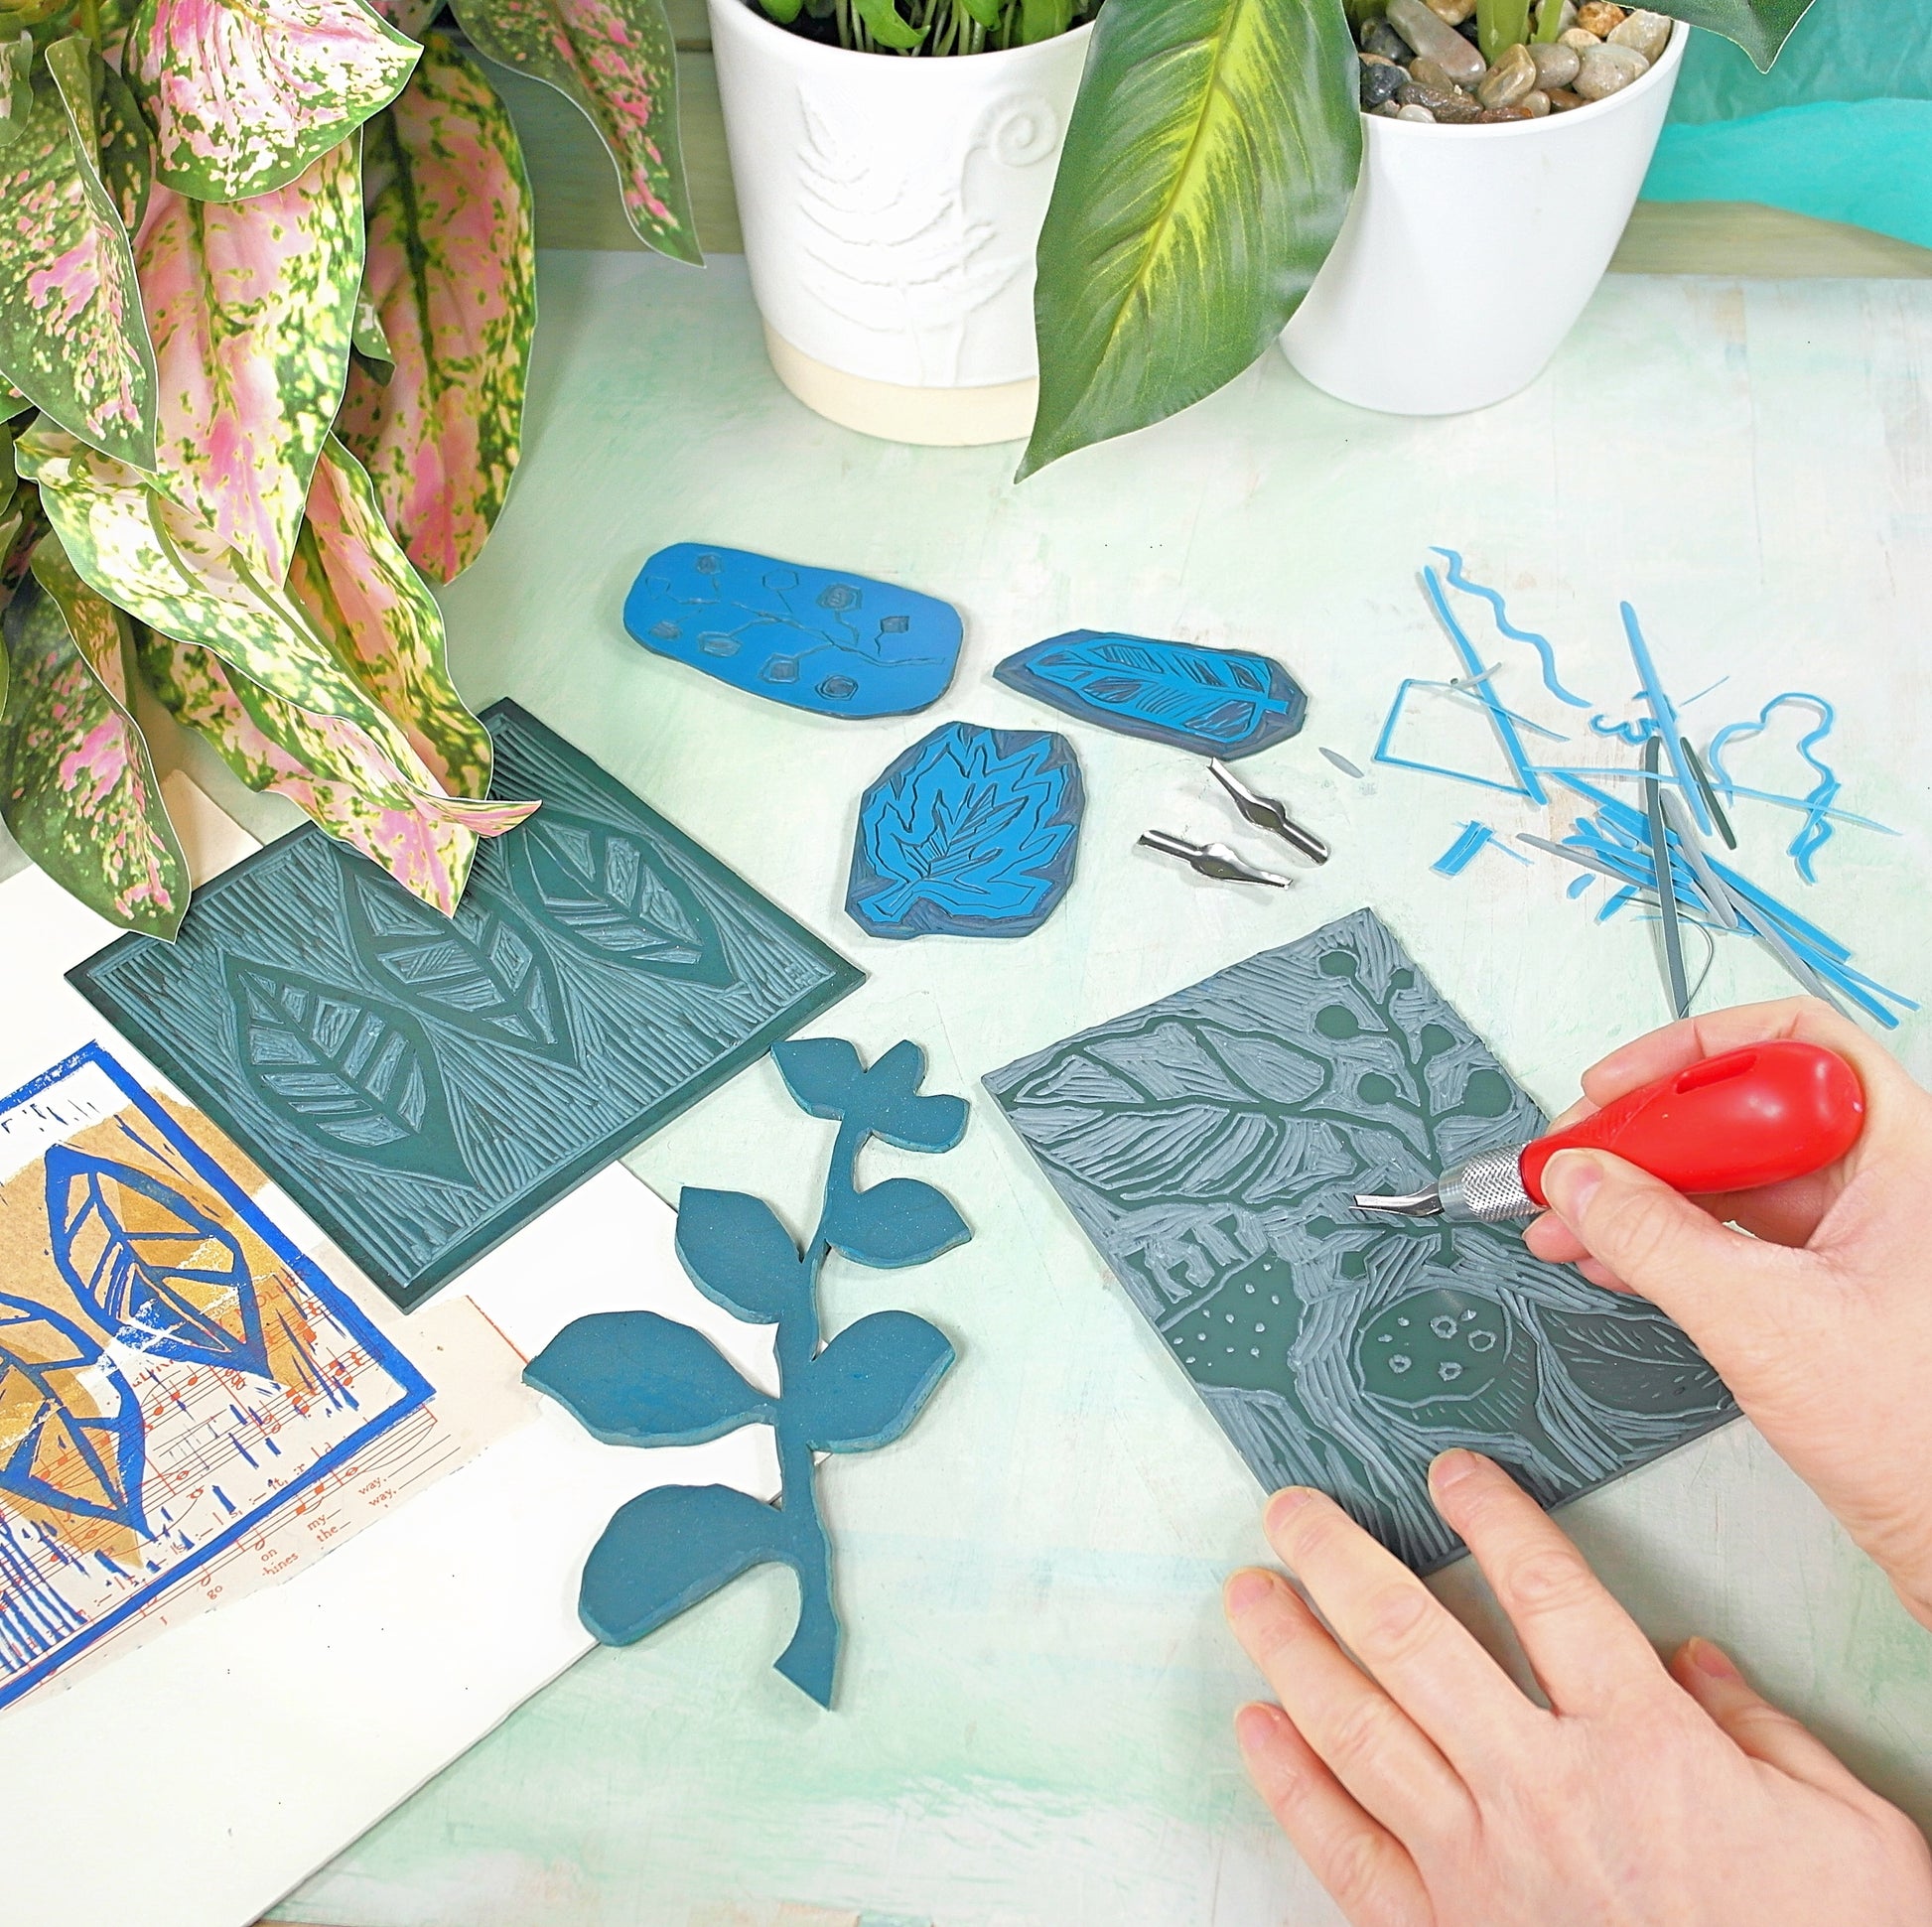 Lino print kits & gift sets – Clever Hands